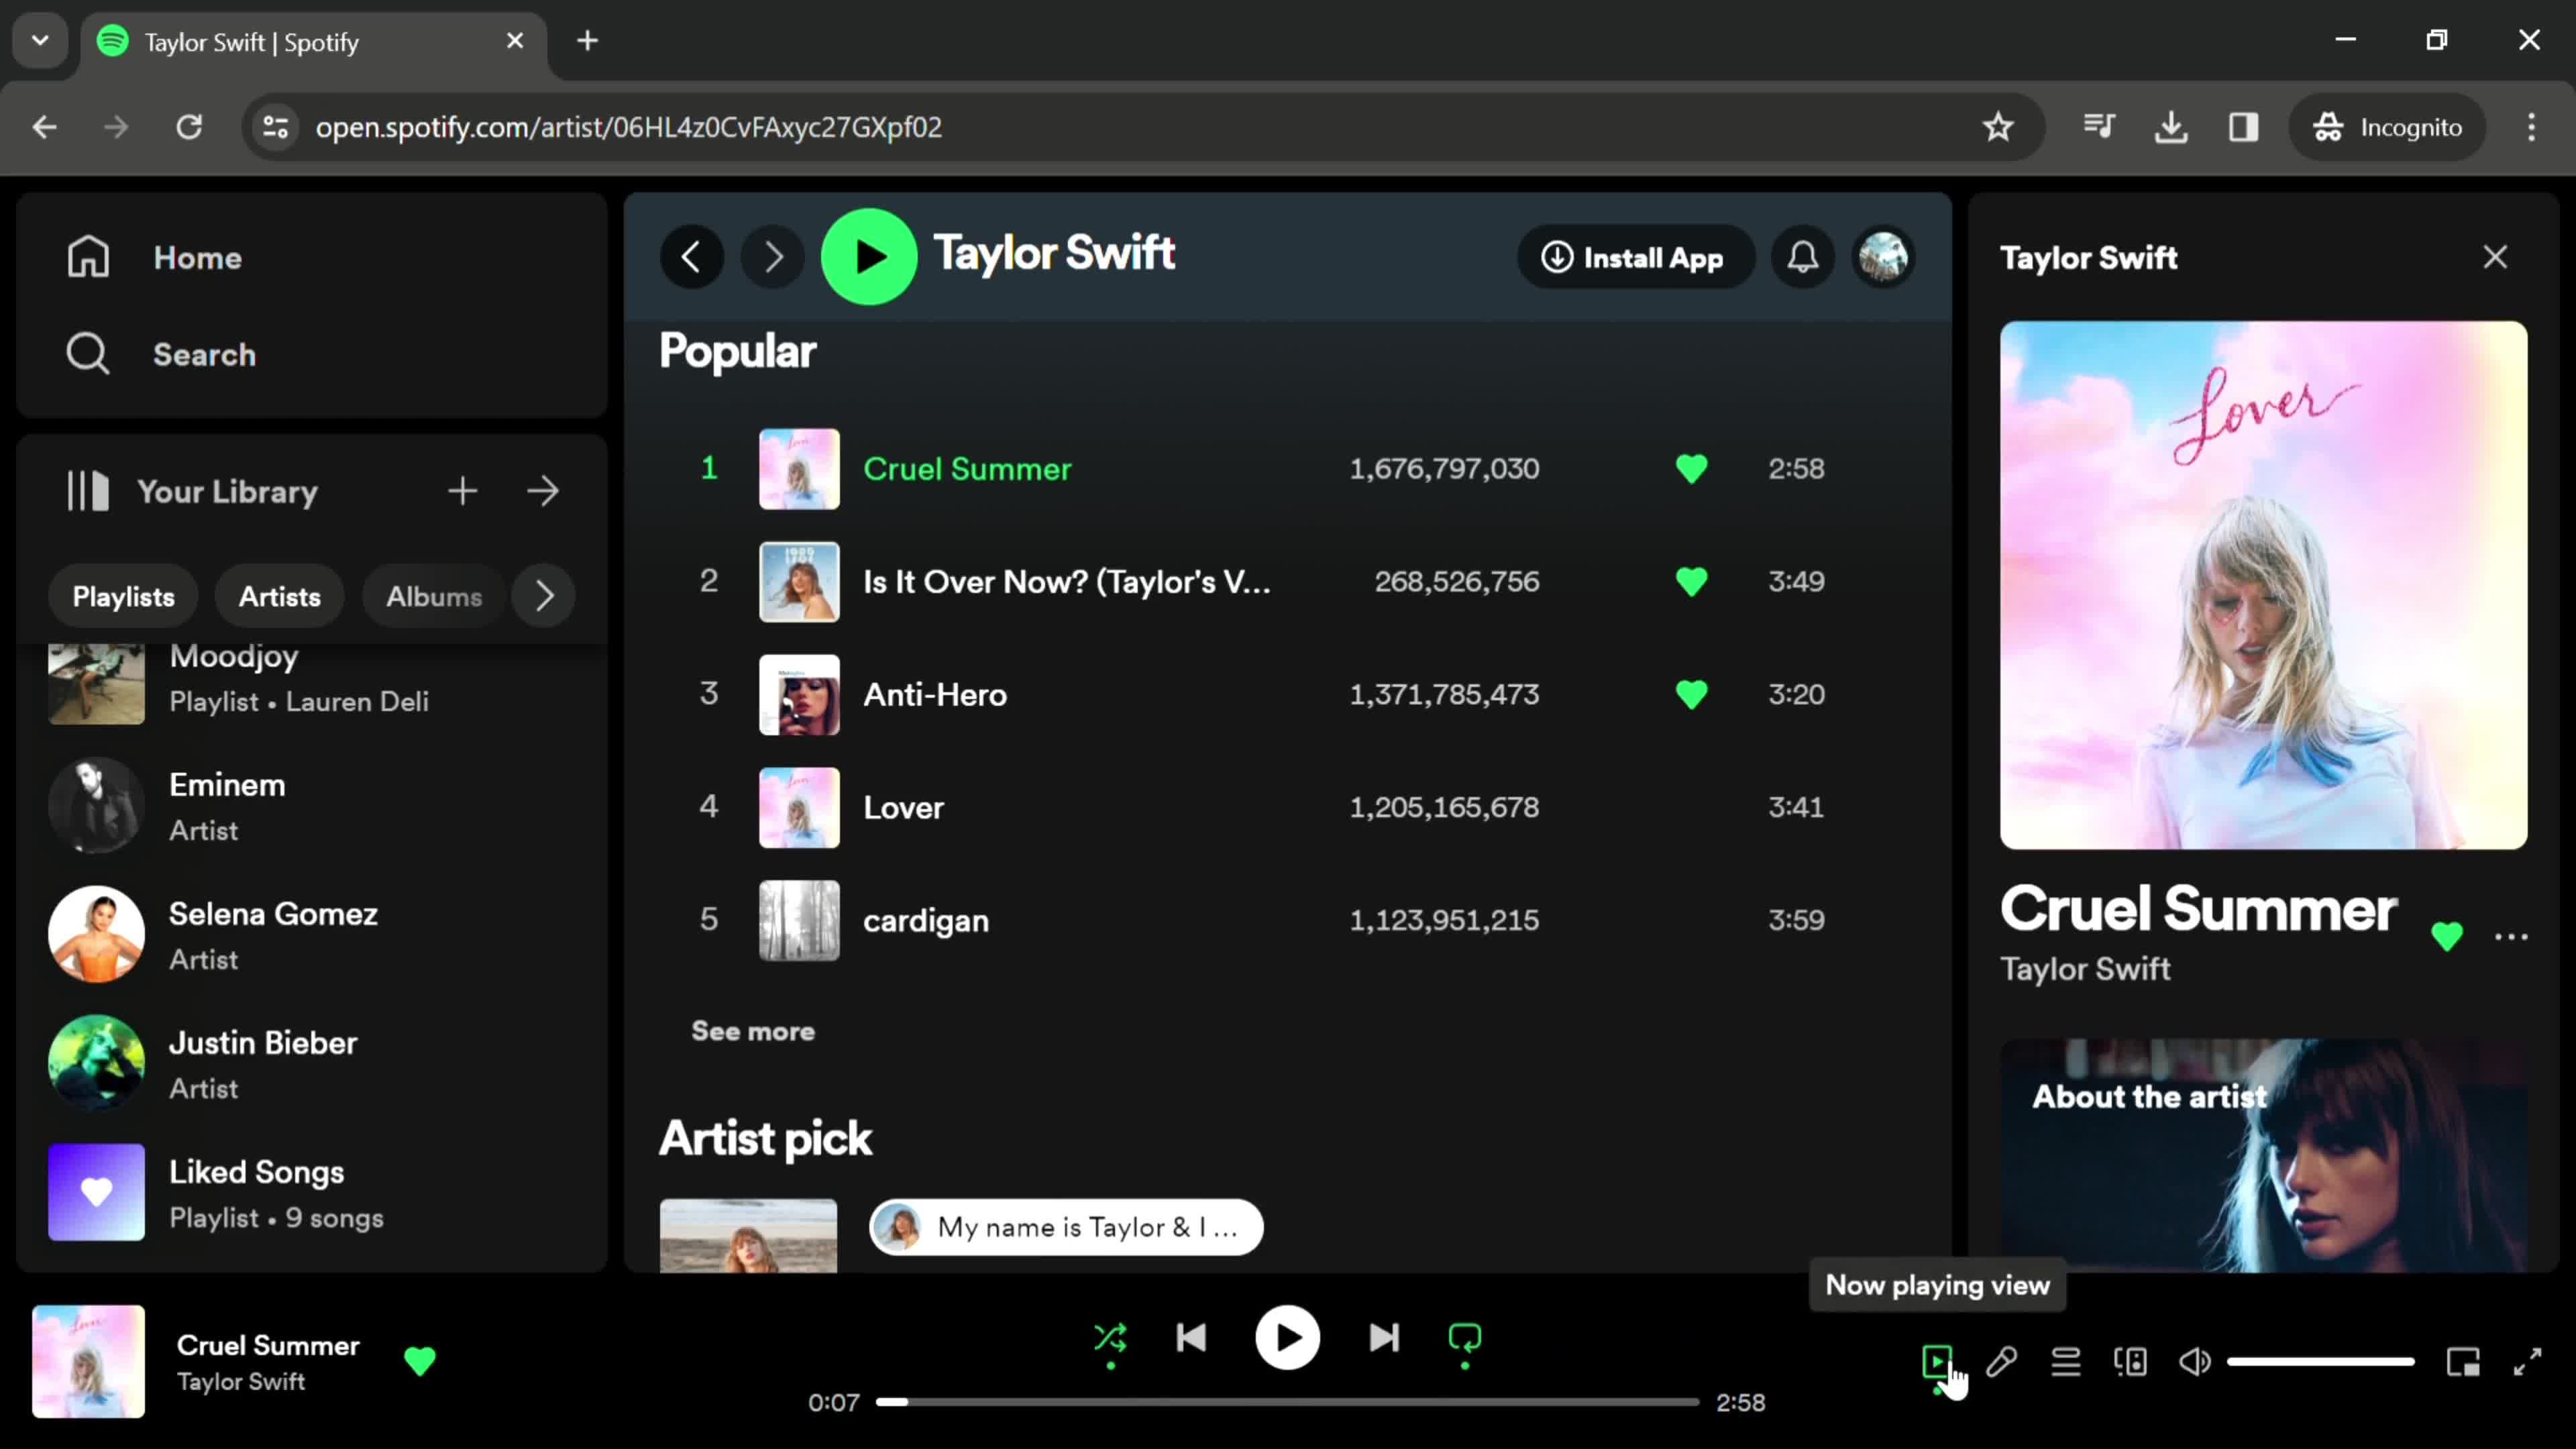 Spotify now playing view screenshot